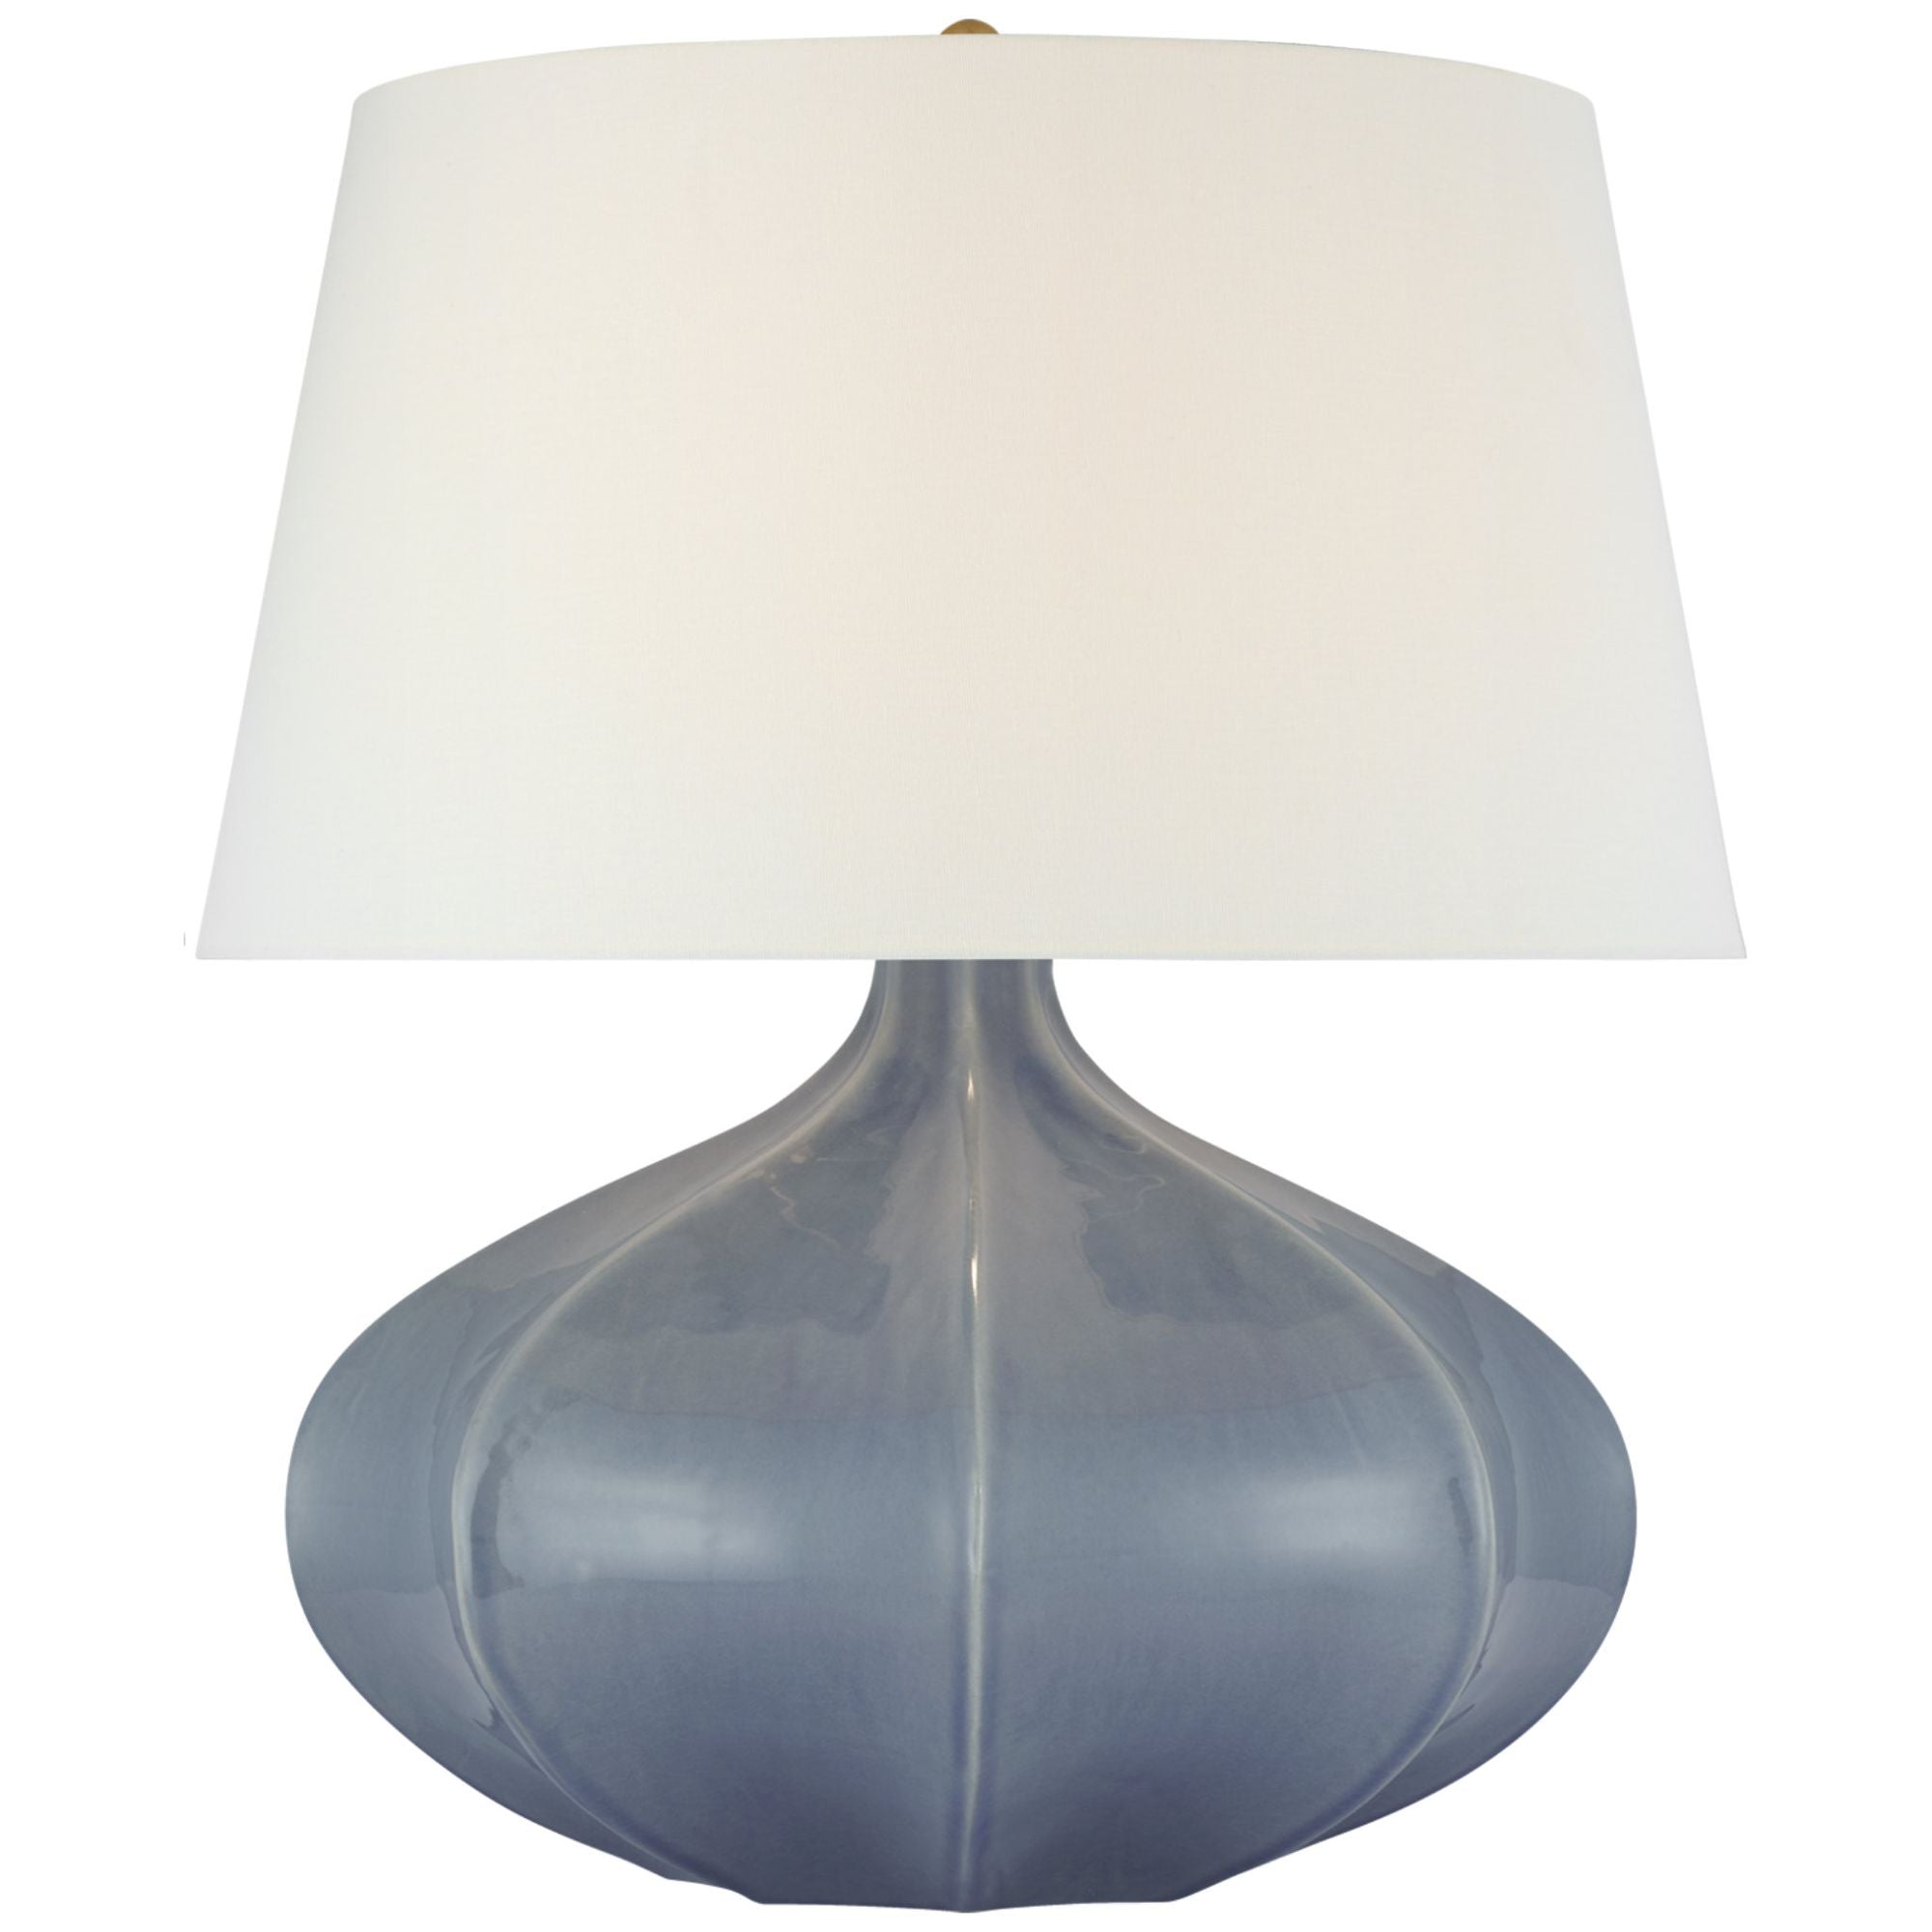 AERIN Rana Medium Wide Table Lamp in Polar Blue Crackle with Linen Shade